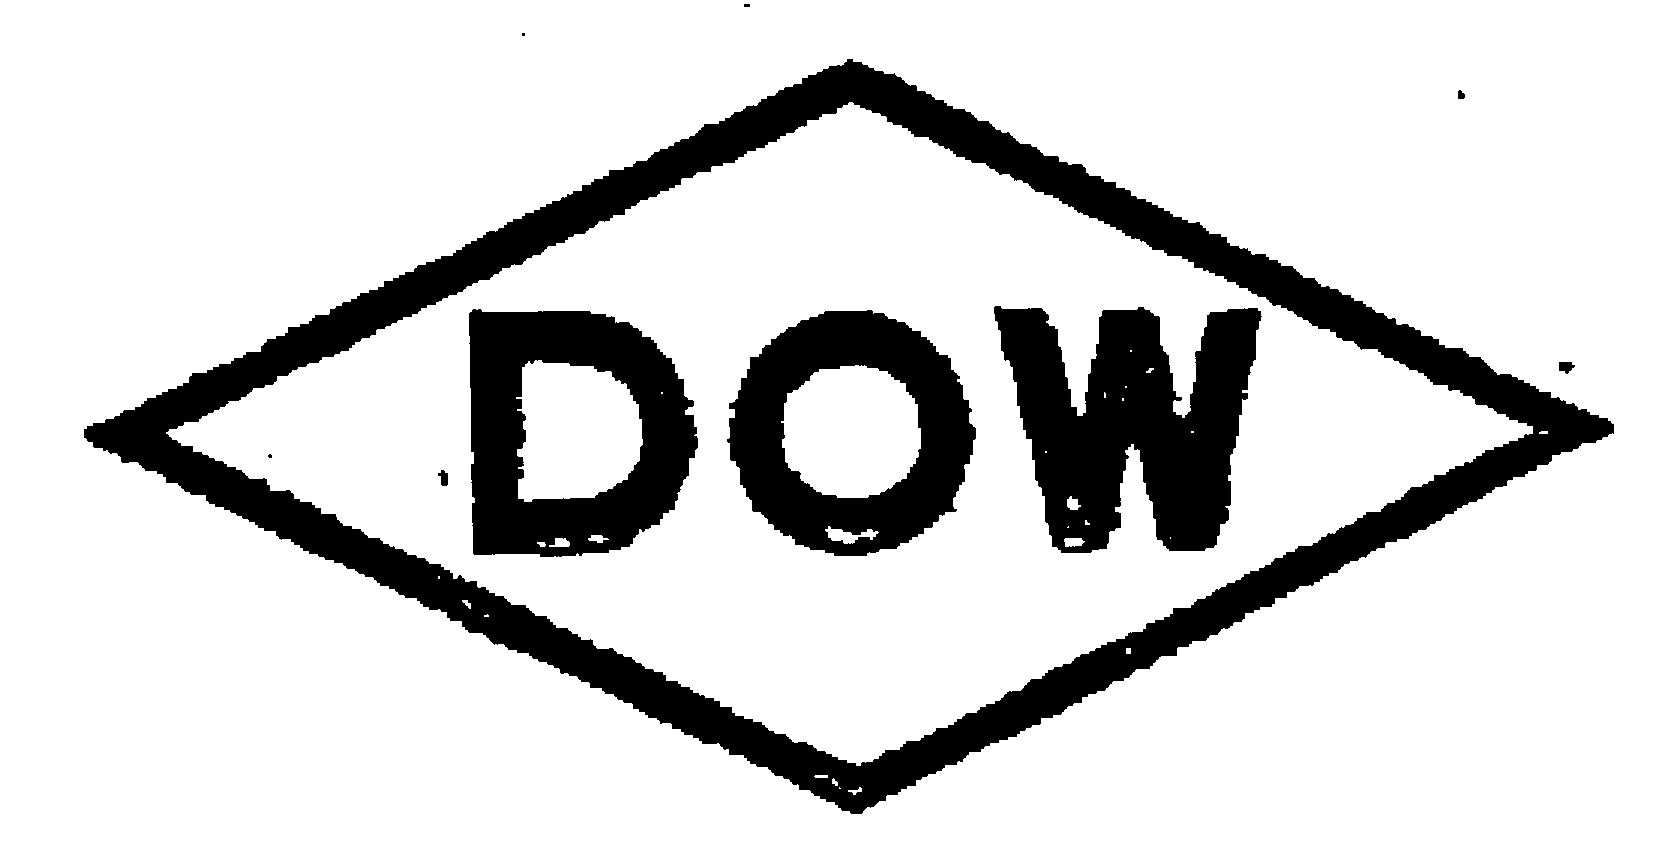 Trademark Logo DOW